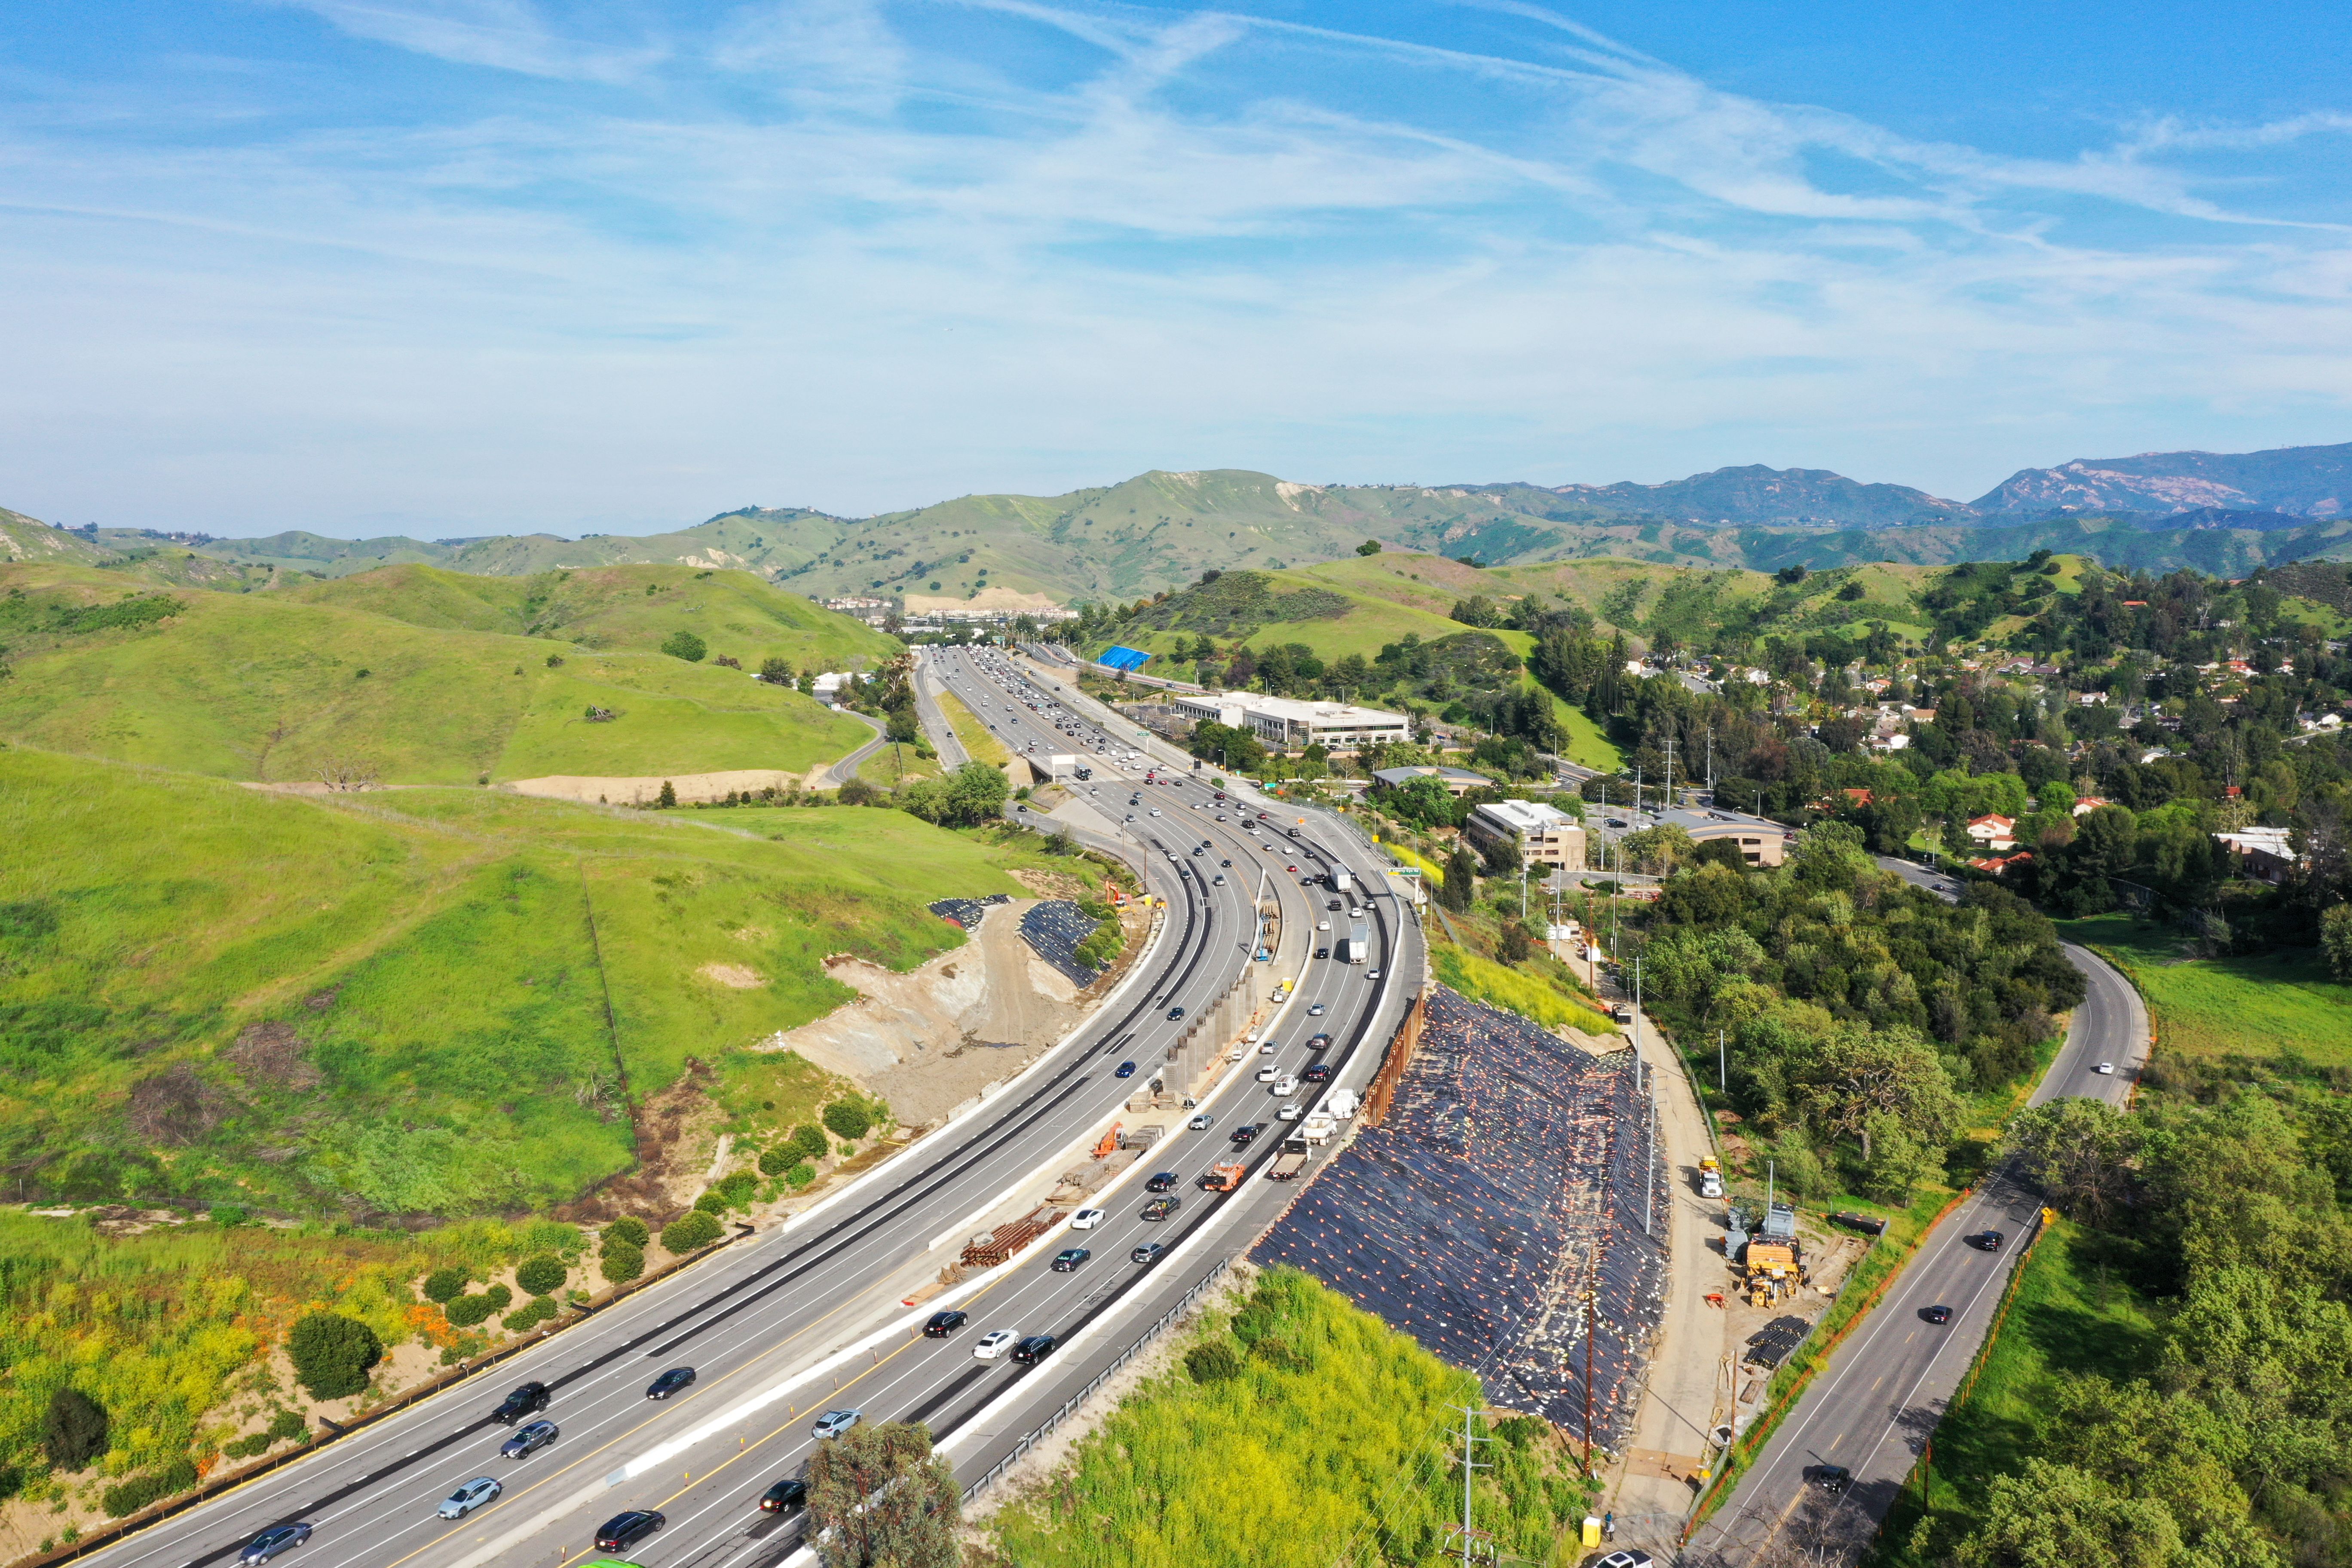 Major Los Angeles highway to undergo weeks of closures to construct large wildlife crossing | CNN